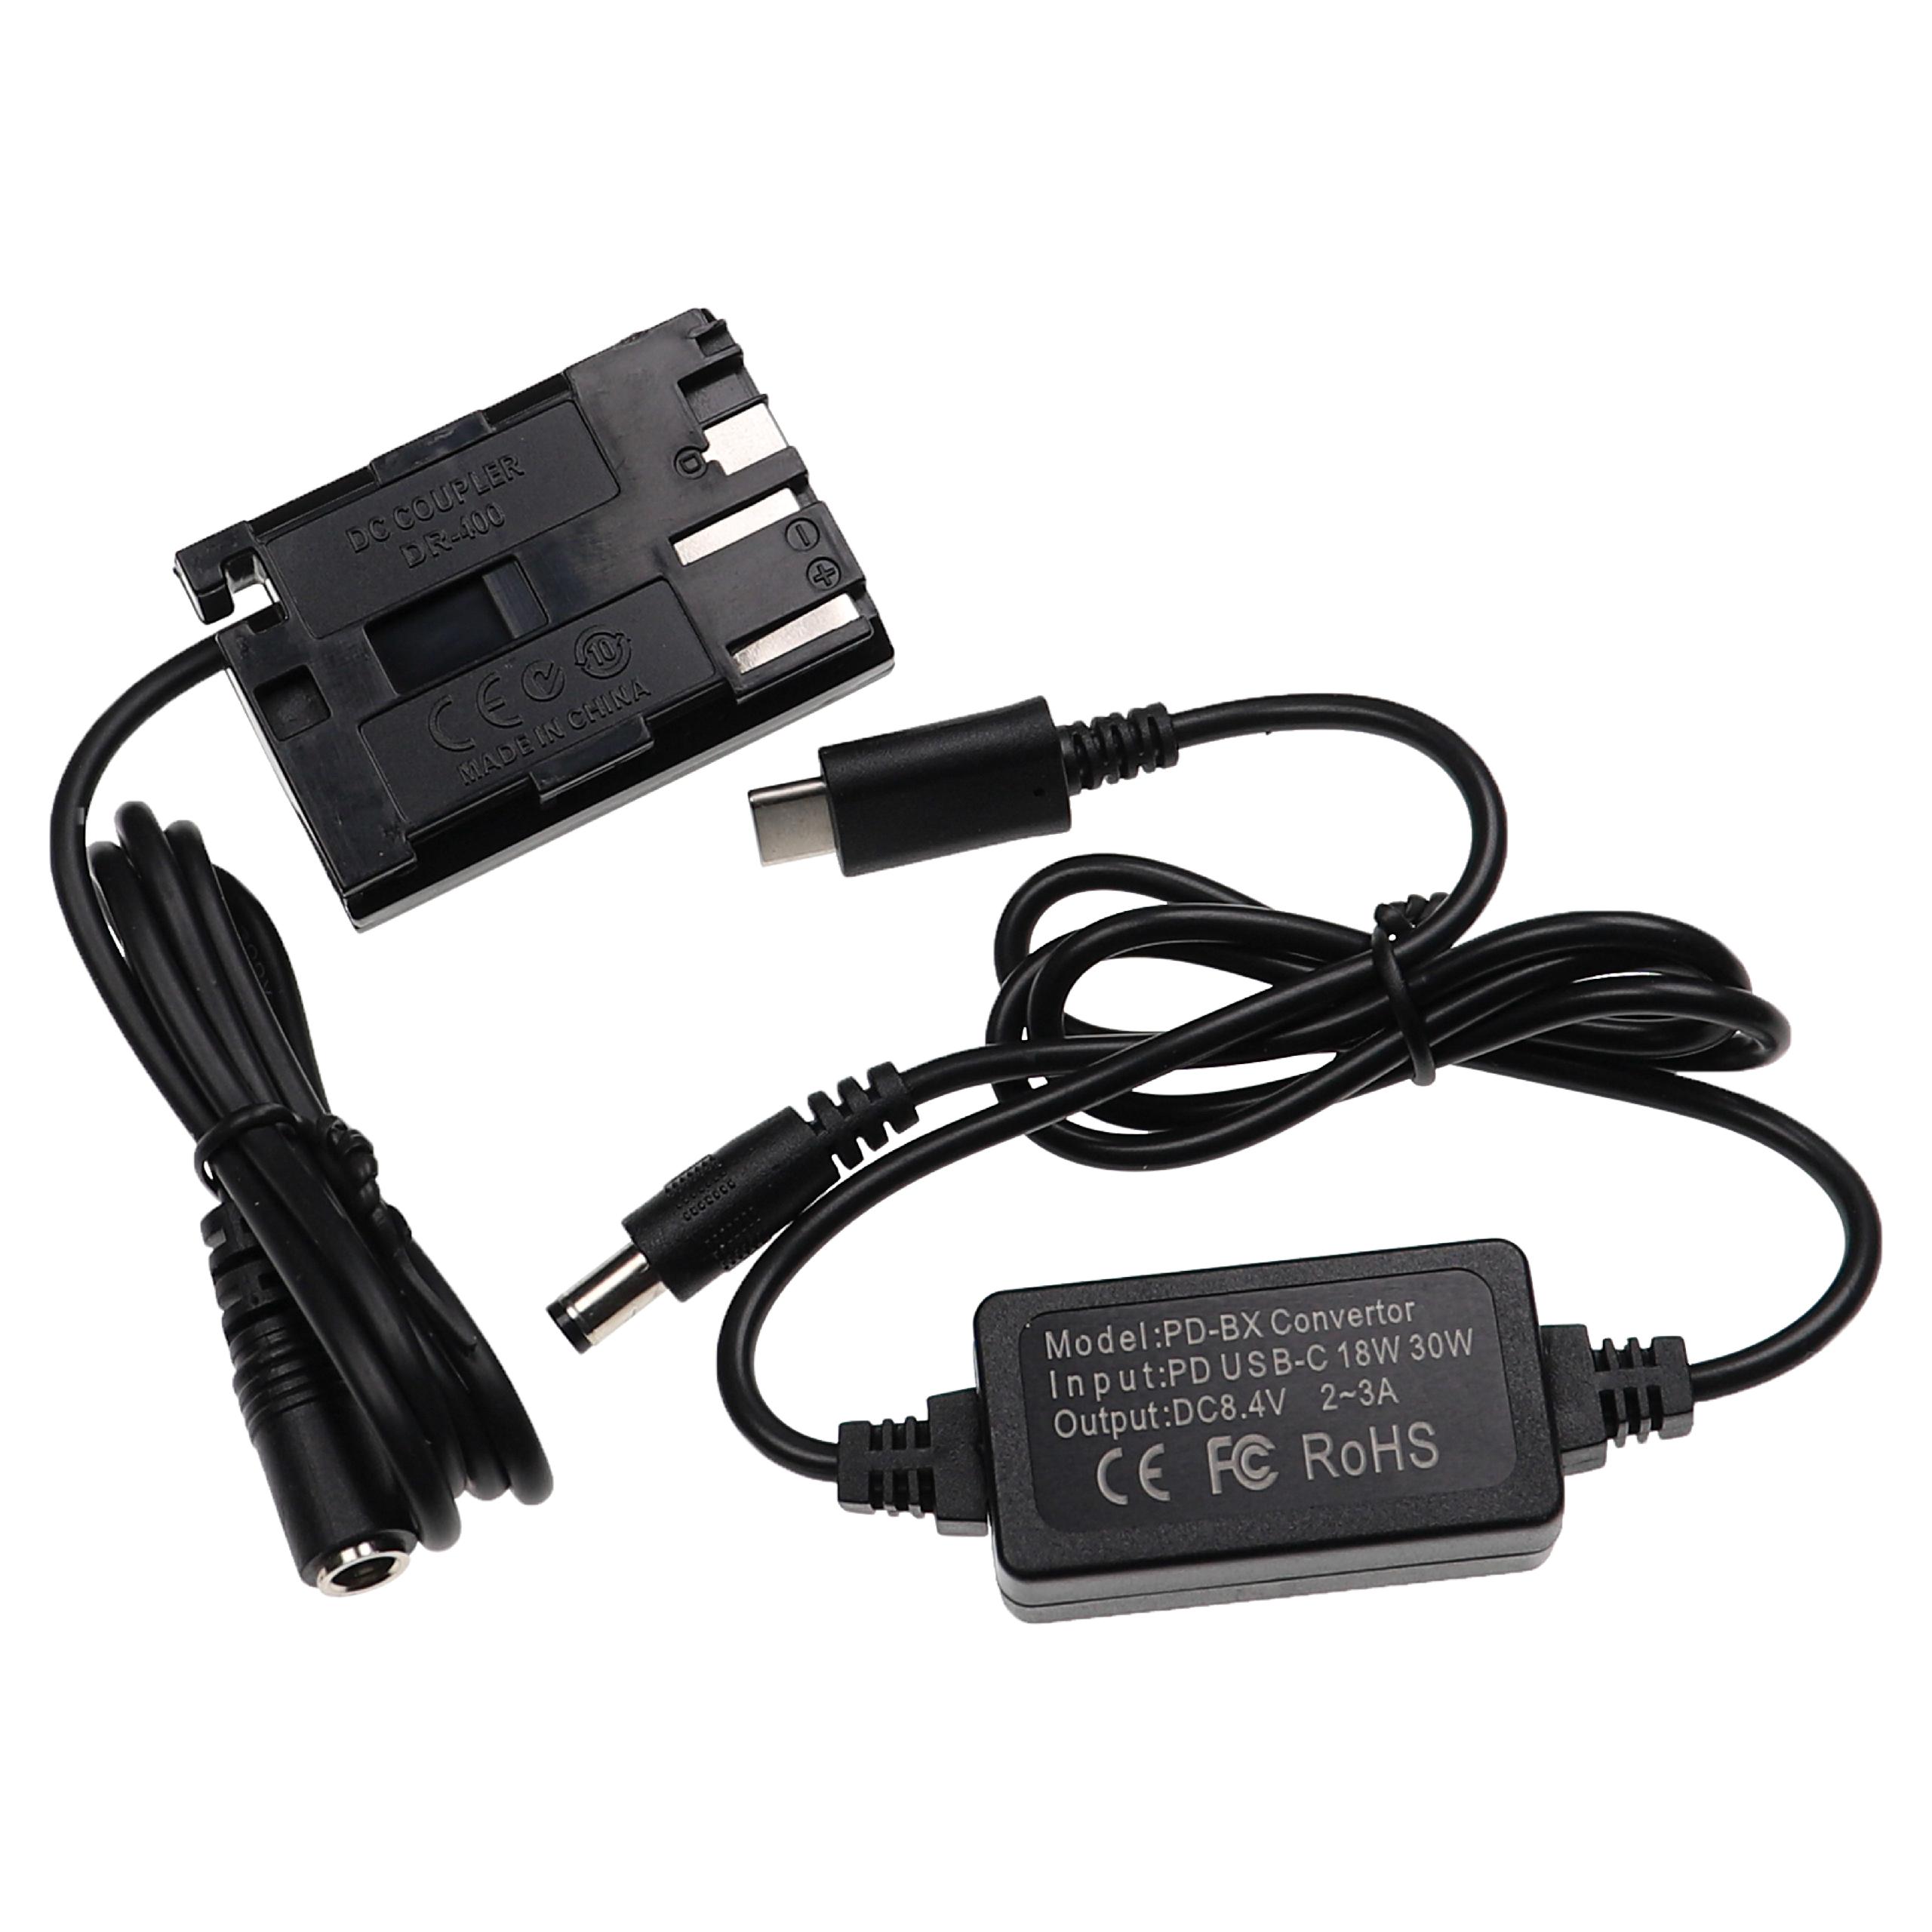 USB Power Supply replaces ACK-E2 for Camera + DC Coupler as Canon DR-400 - 2 m, 8.4 V 3.0 A